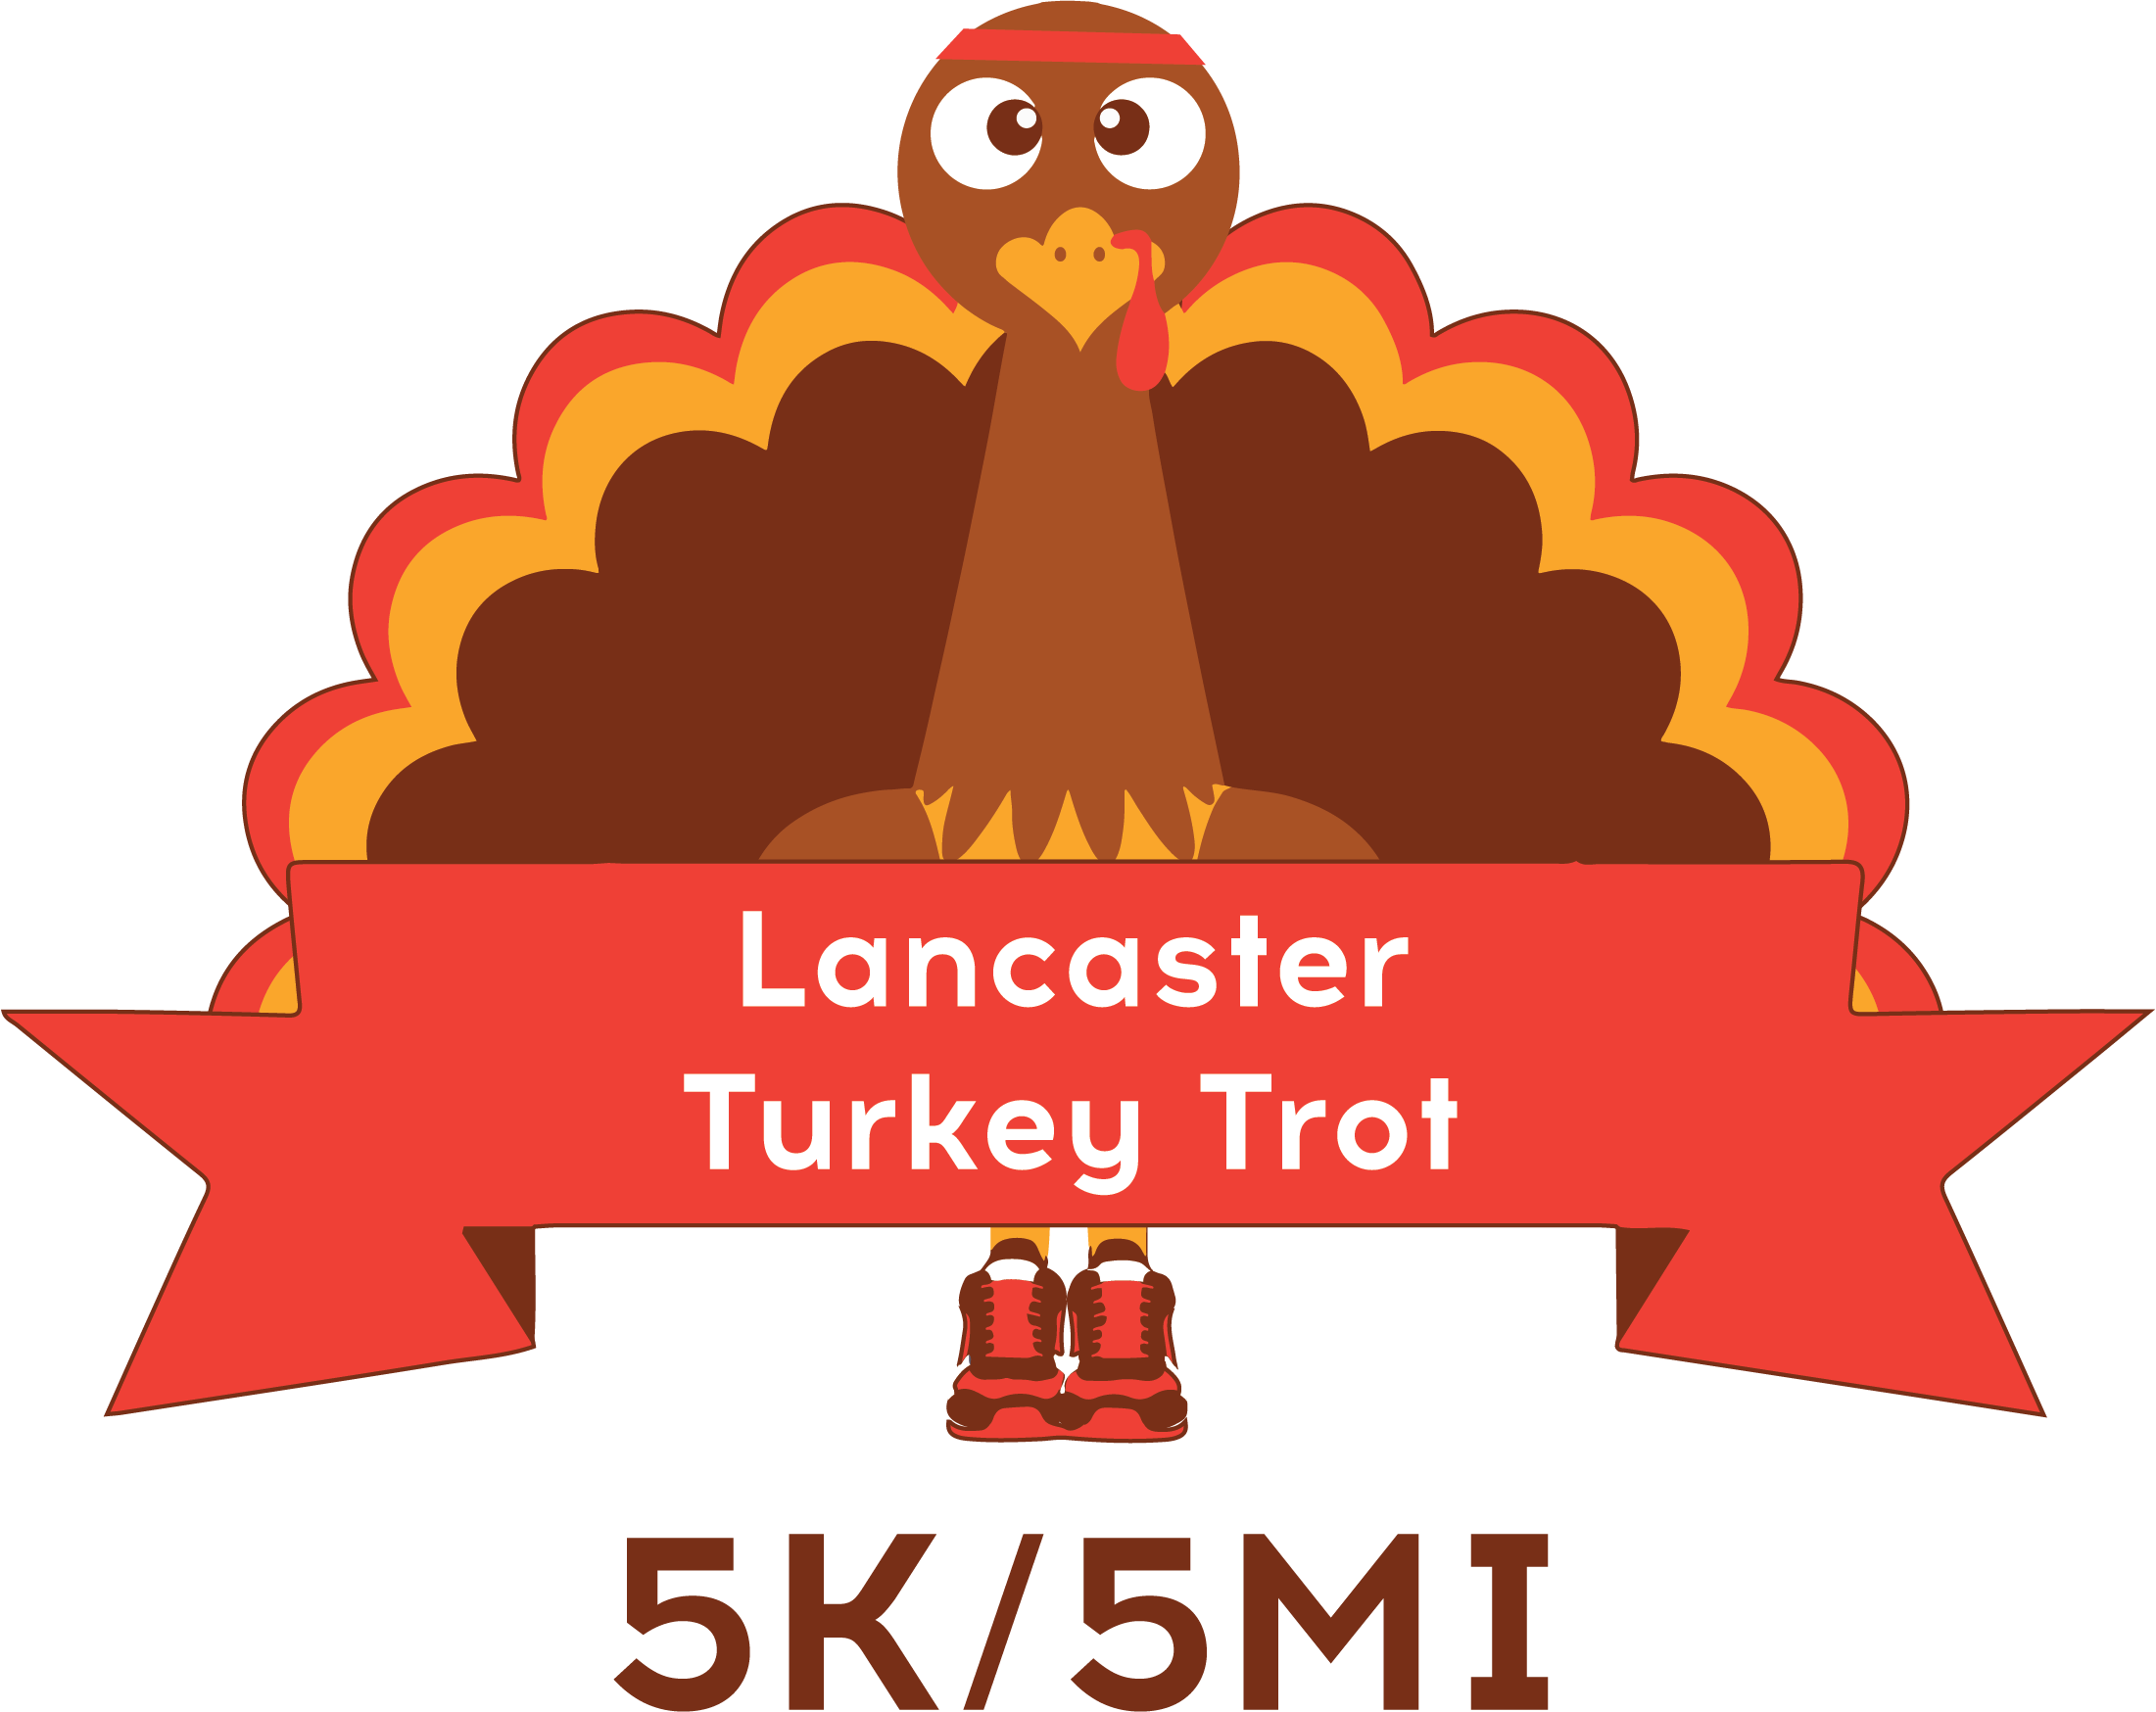 Lancaster Ohio Turkey Trot 5k 5 Mile Run Walk Chip Timed Race Event